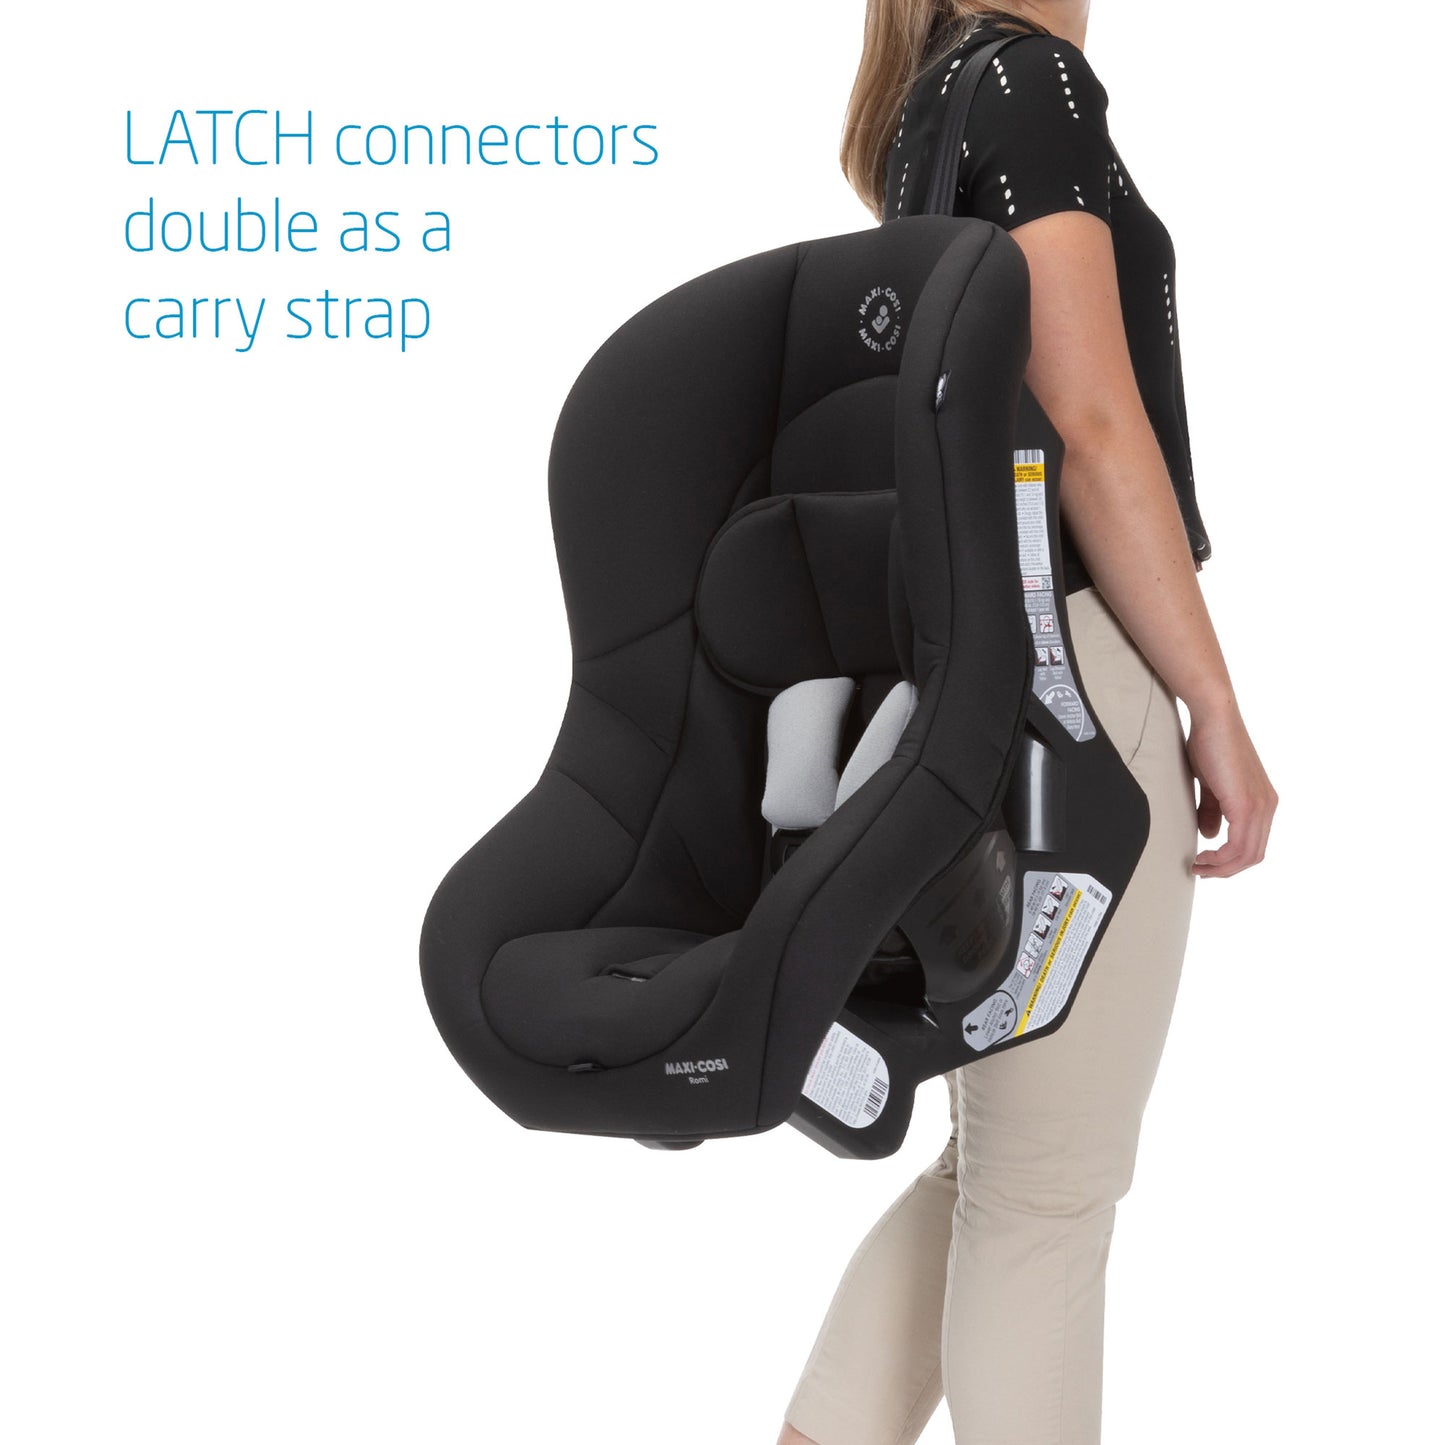 Woman carrying Maxi-Cosi Romi Convertible Car Seat - Essential Black